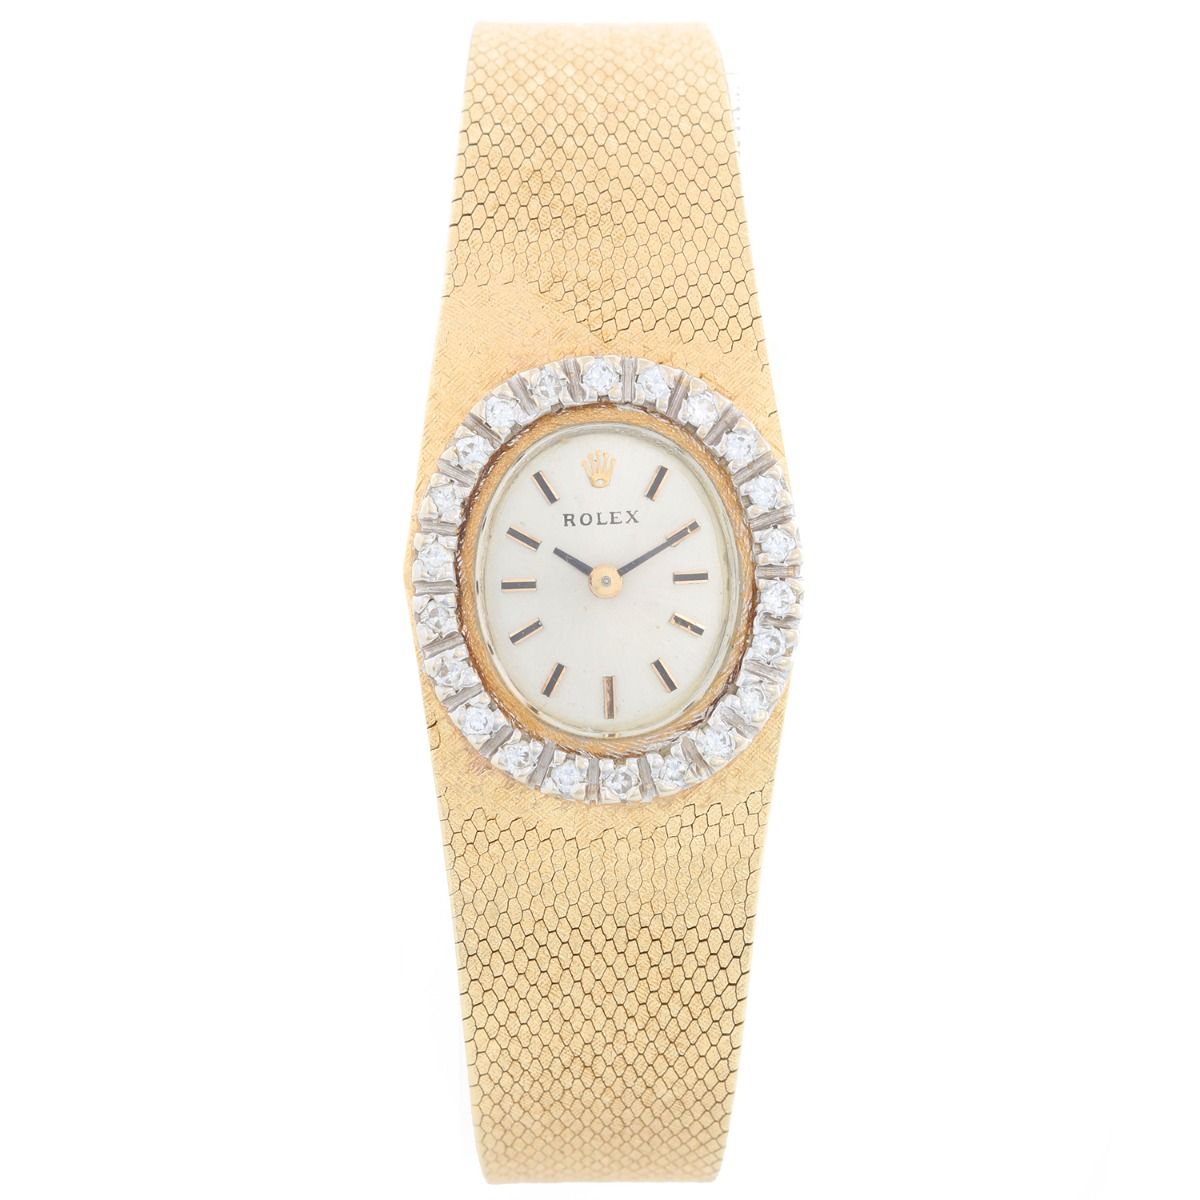 Dum efterklang petroleum Vintage Rolex Ladies 14K Yellow Gold and Diamond Dress Watch